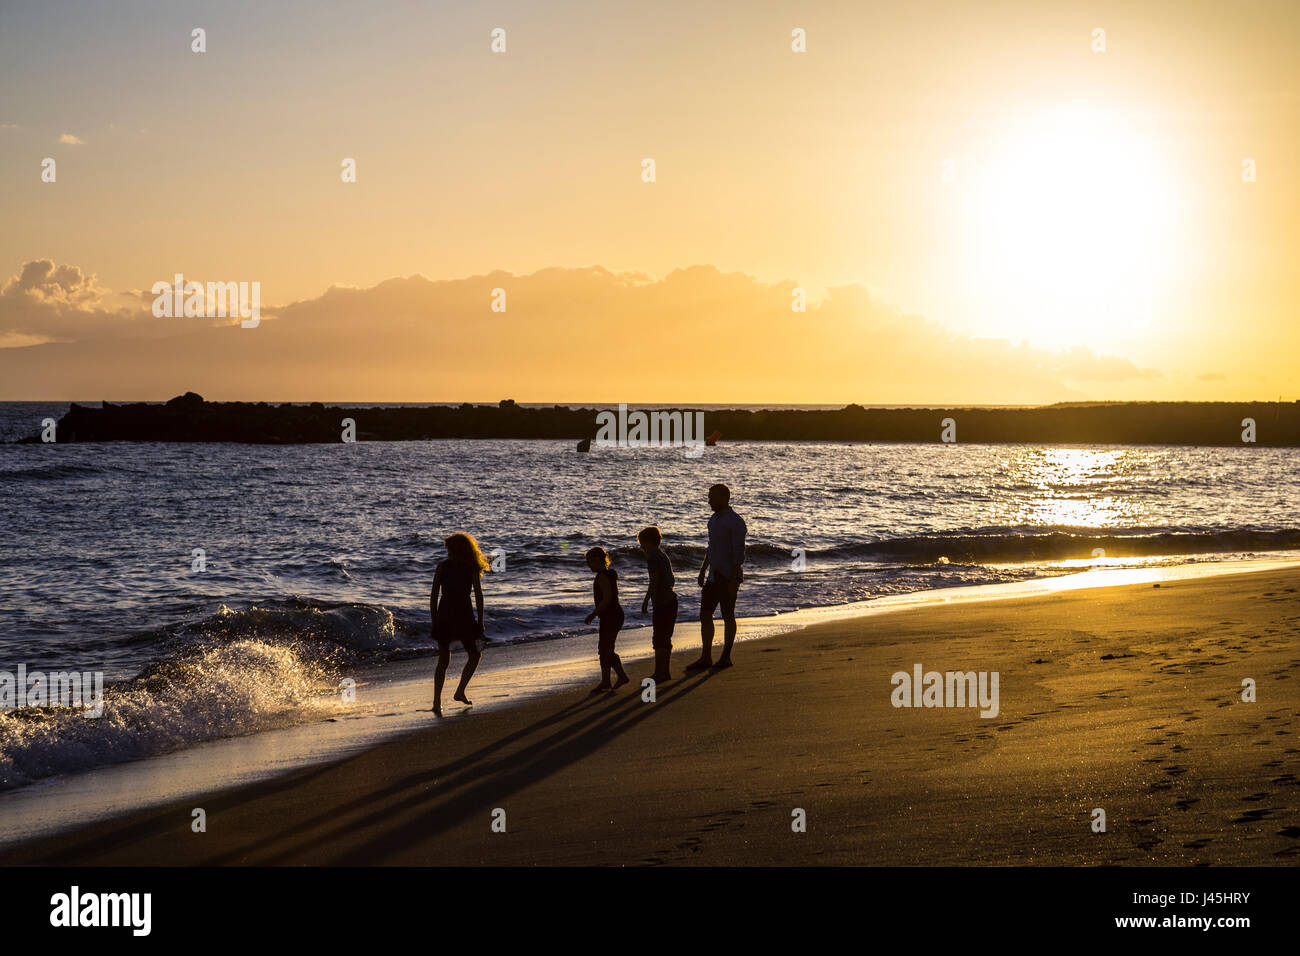 Silhouettes of a family on a beach at sundown (Tenerife, Spain) Stock Photo